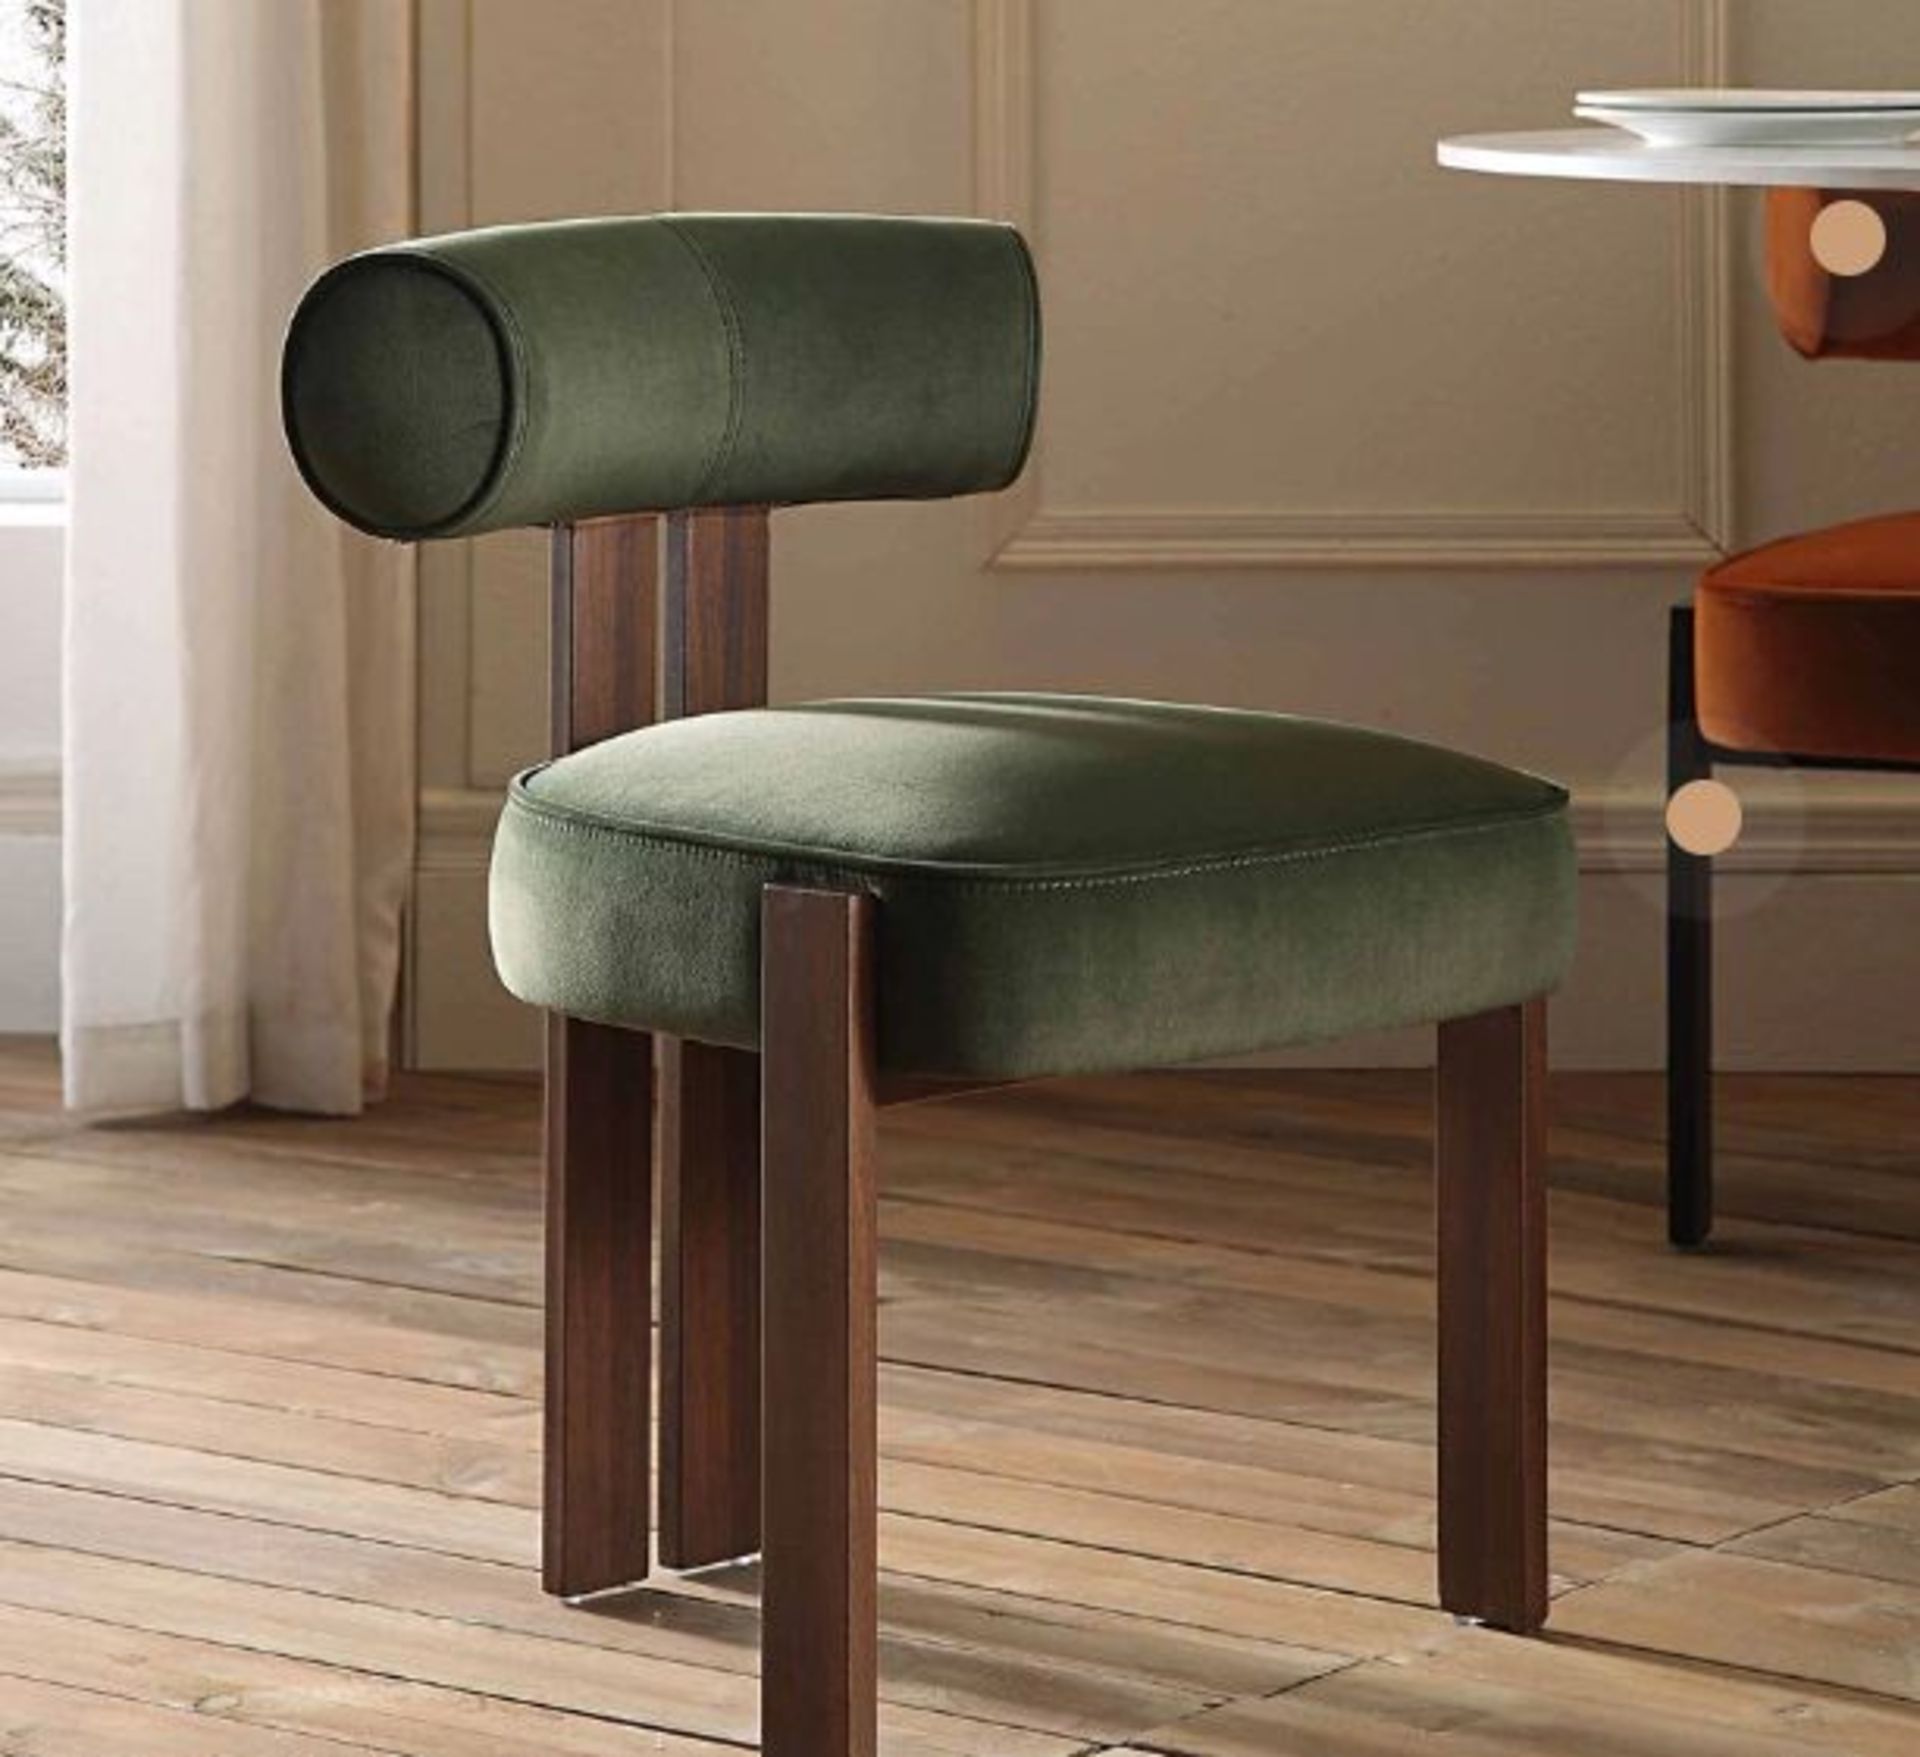 Ophelia Moss Green Velvet Dining Chair. - R19.6. RRP £209.99. Combining sumptuous moss green